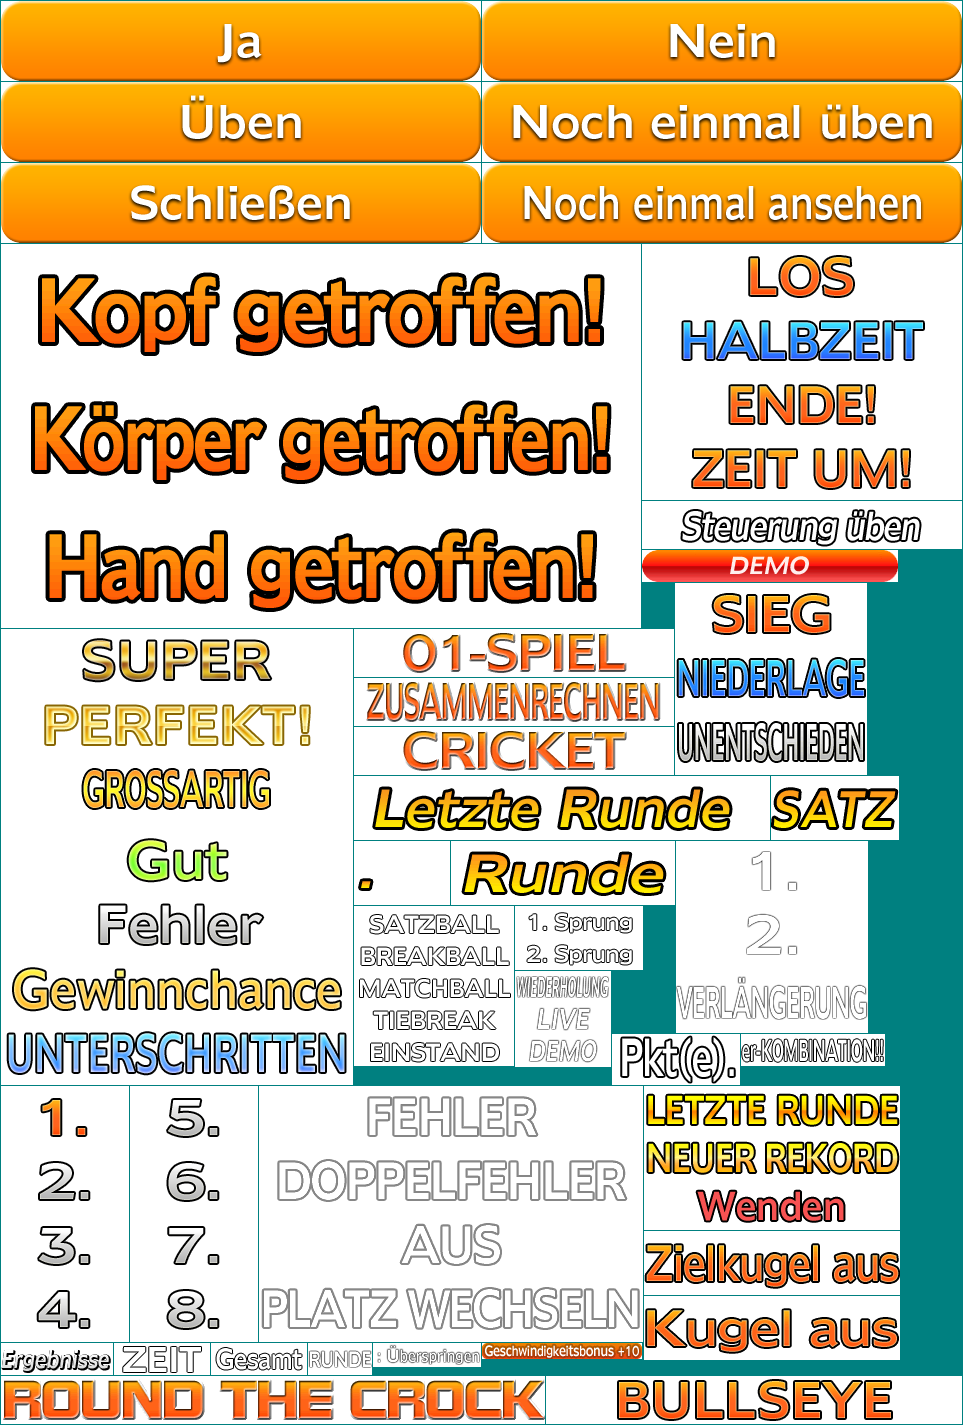 Text (German)